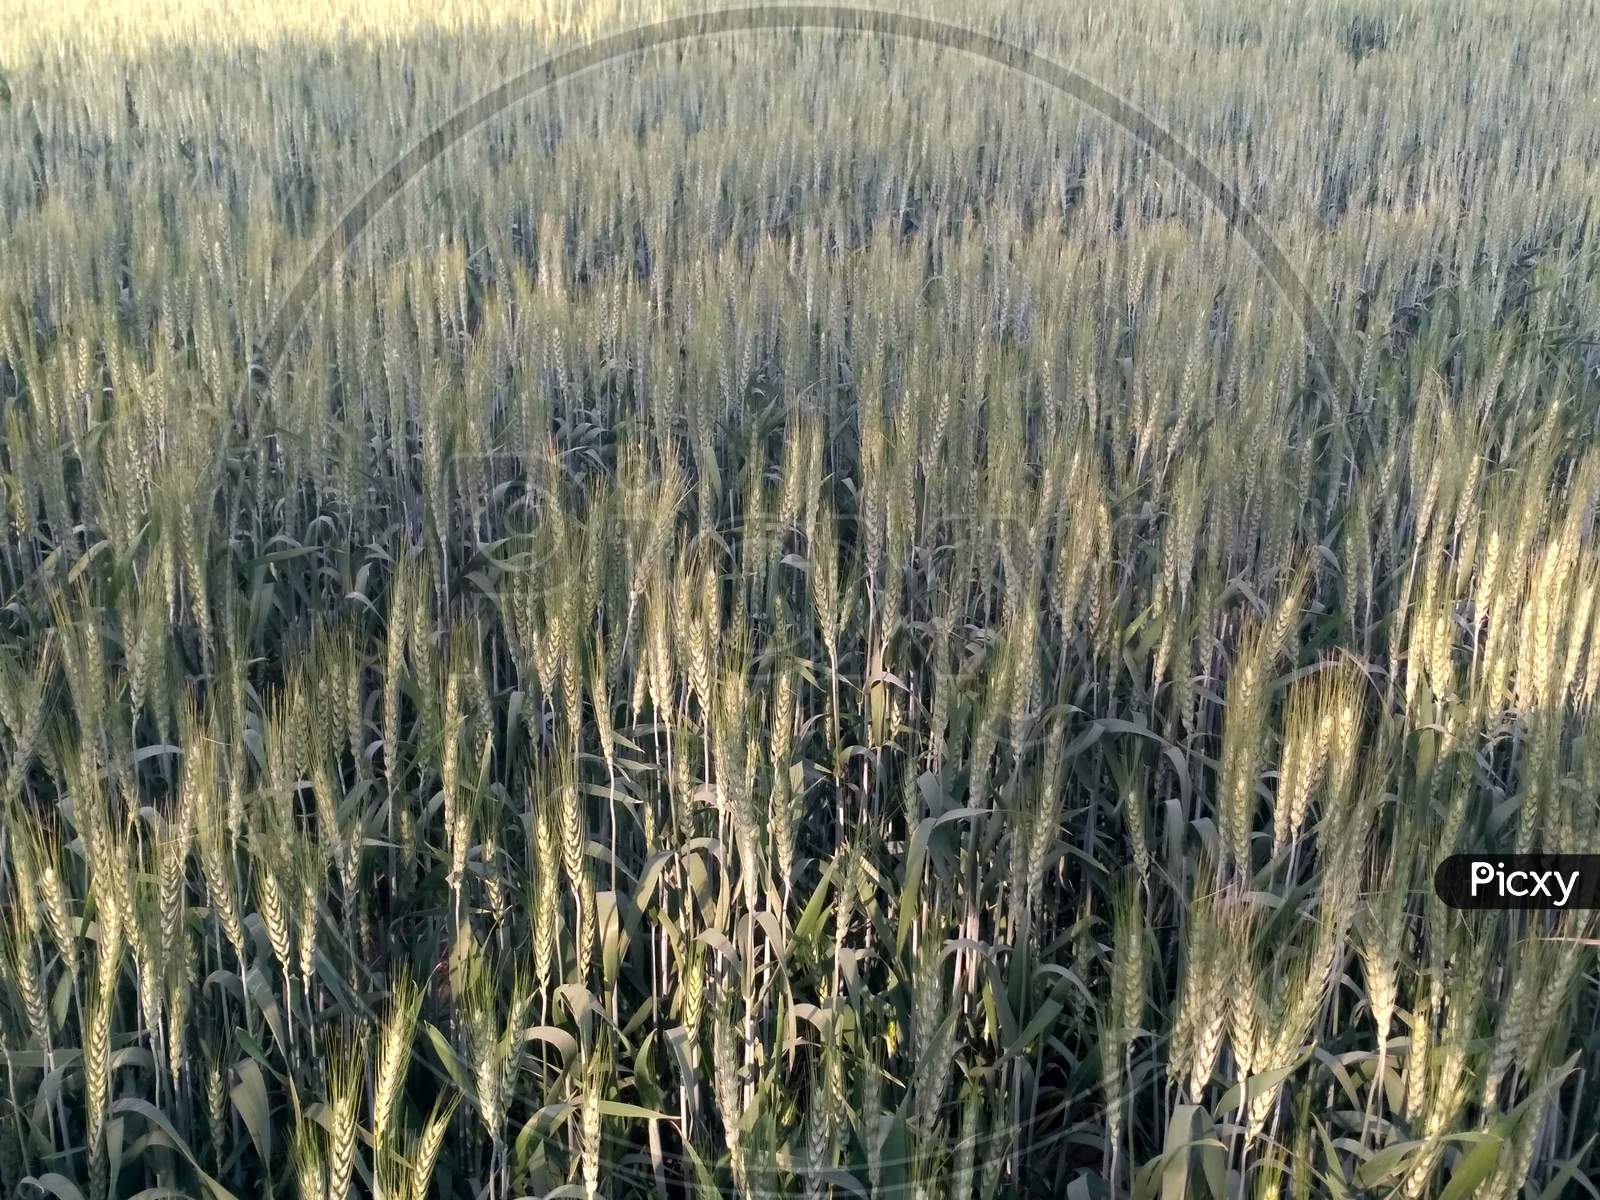 Wheat Crop Field, Golden Wheat Farm, Plant, Green Cereal Crops, Field Of Wheat, Barley Or Rye, Ears Of Wheat